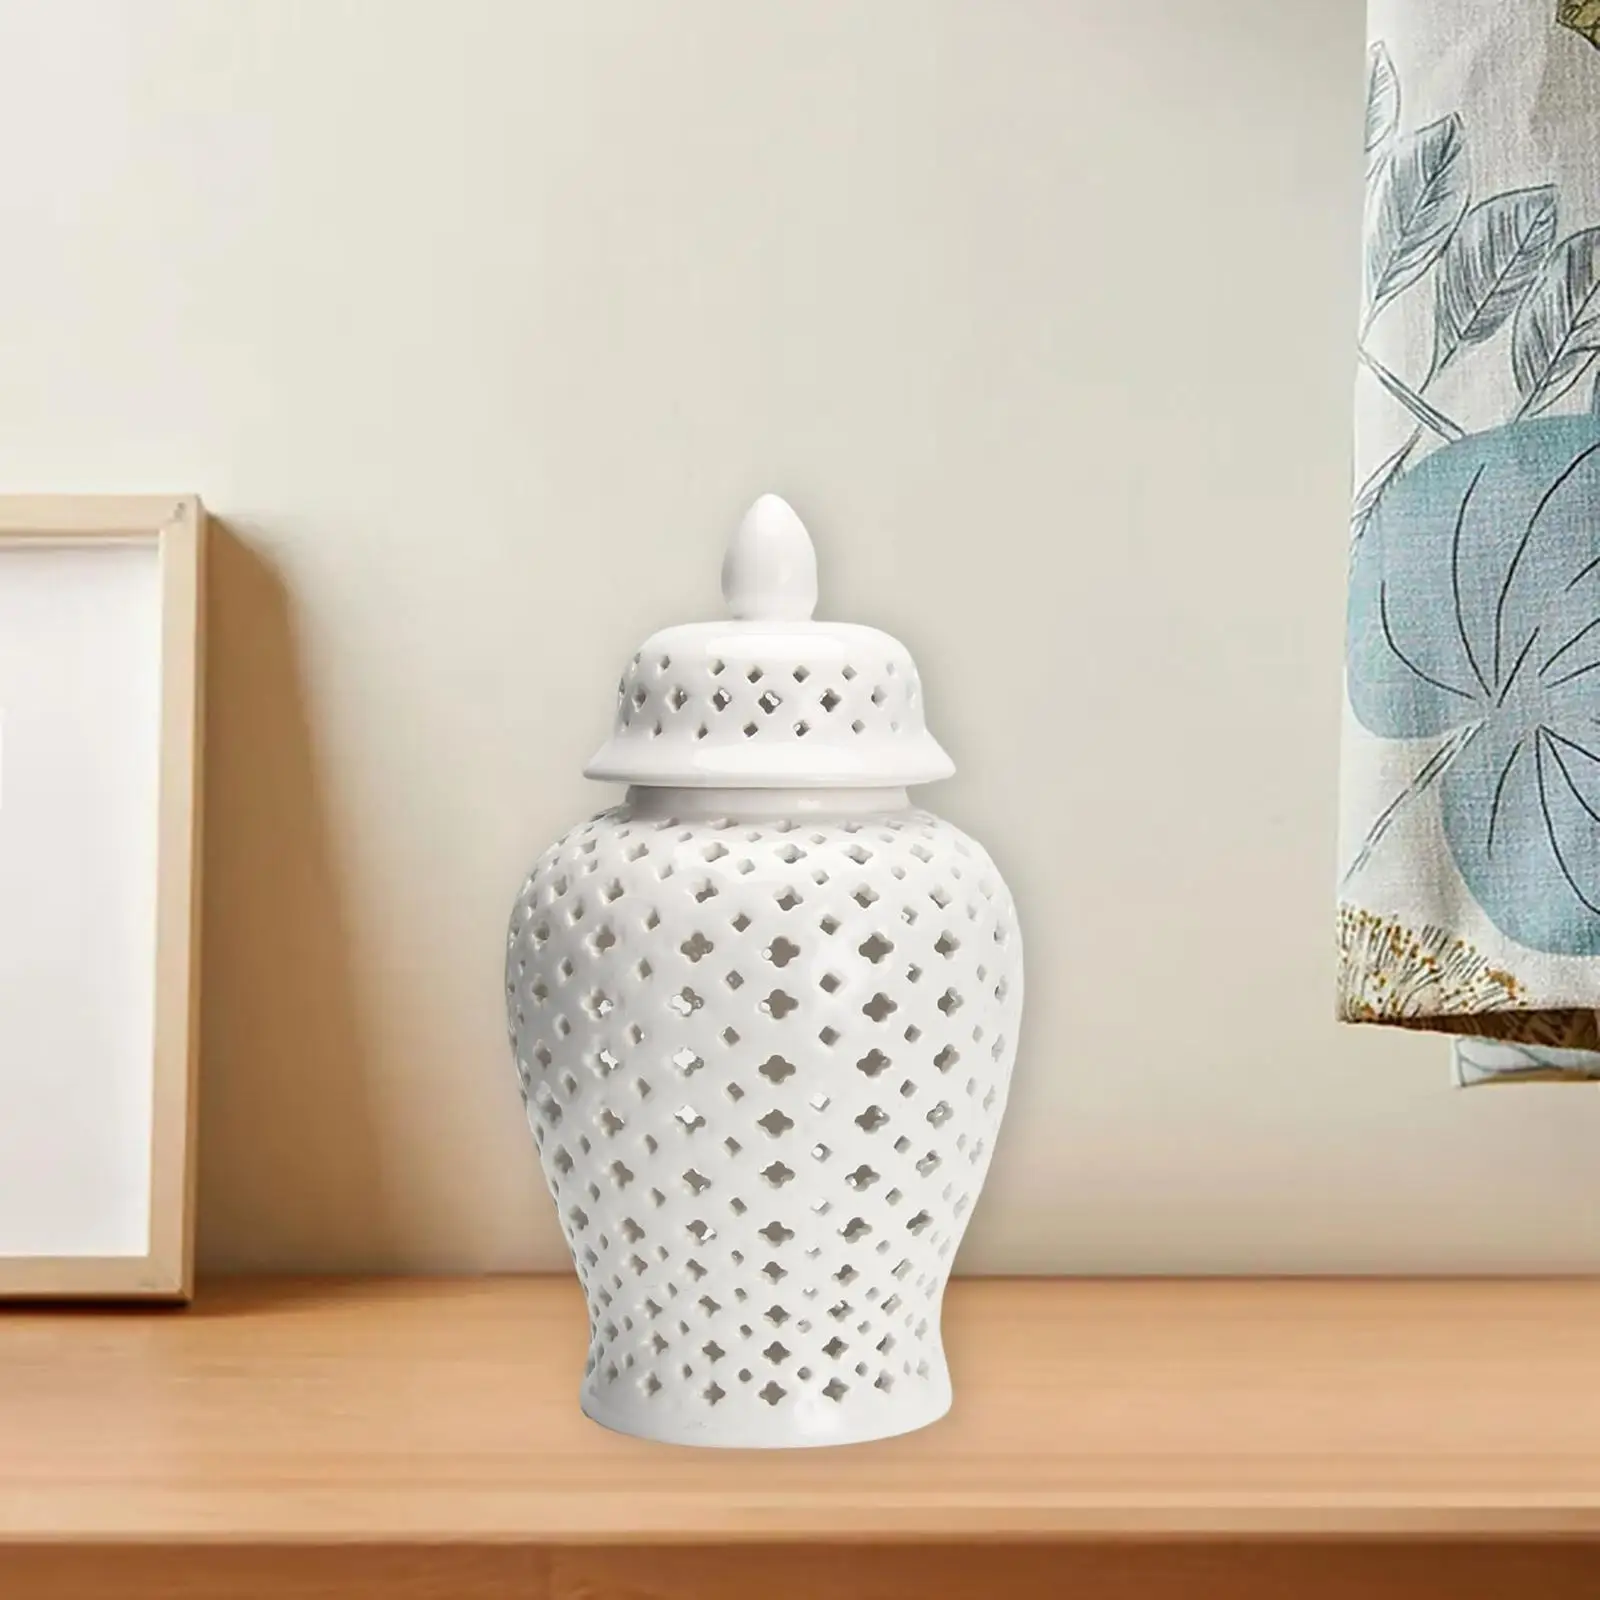 Porcelain Ginger Jar with Lid Collectable Lantern Decorative Handicraft Universal Lattice Jar Vase for Storage Decor Decoration